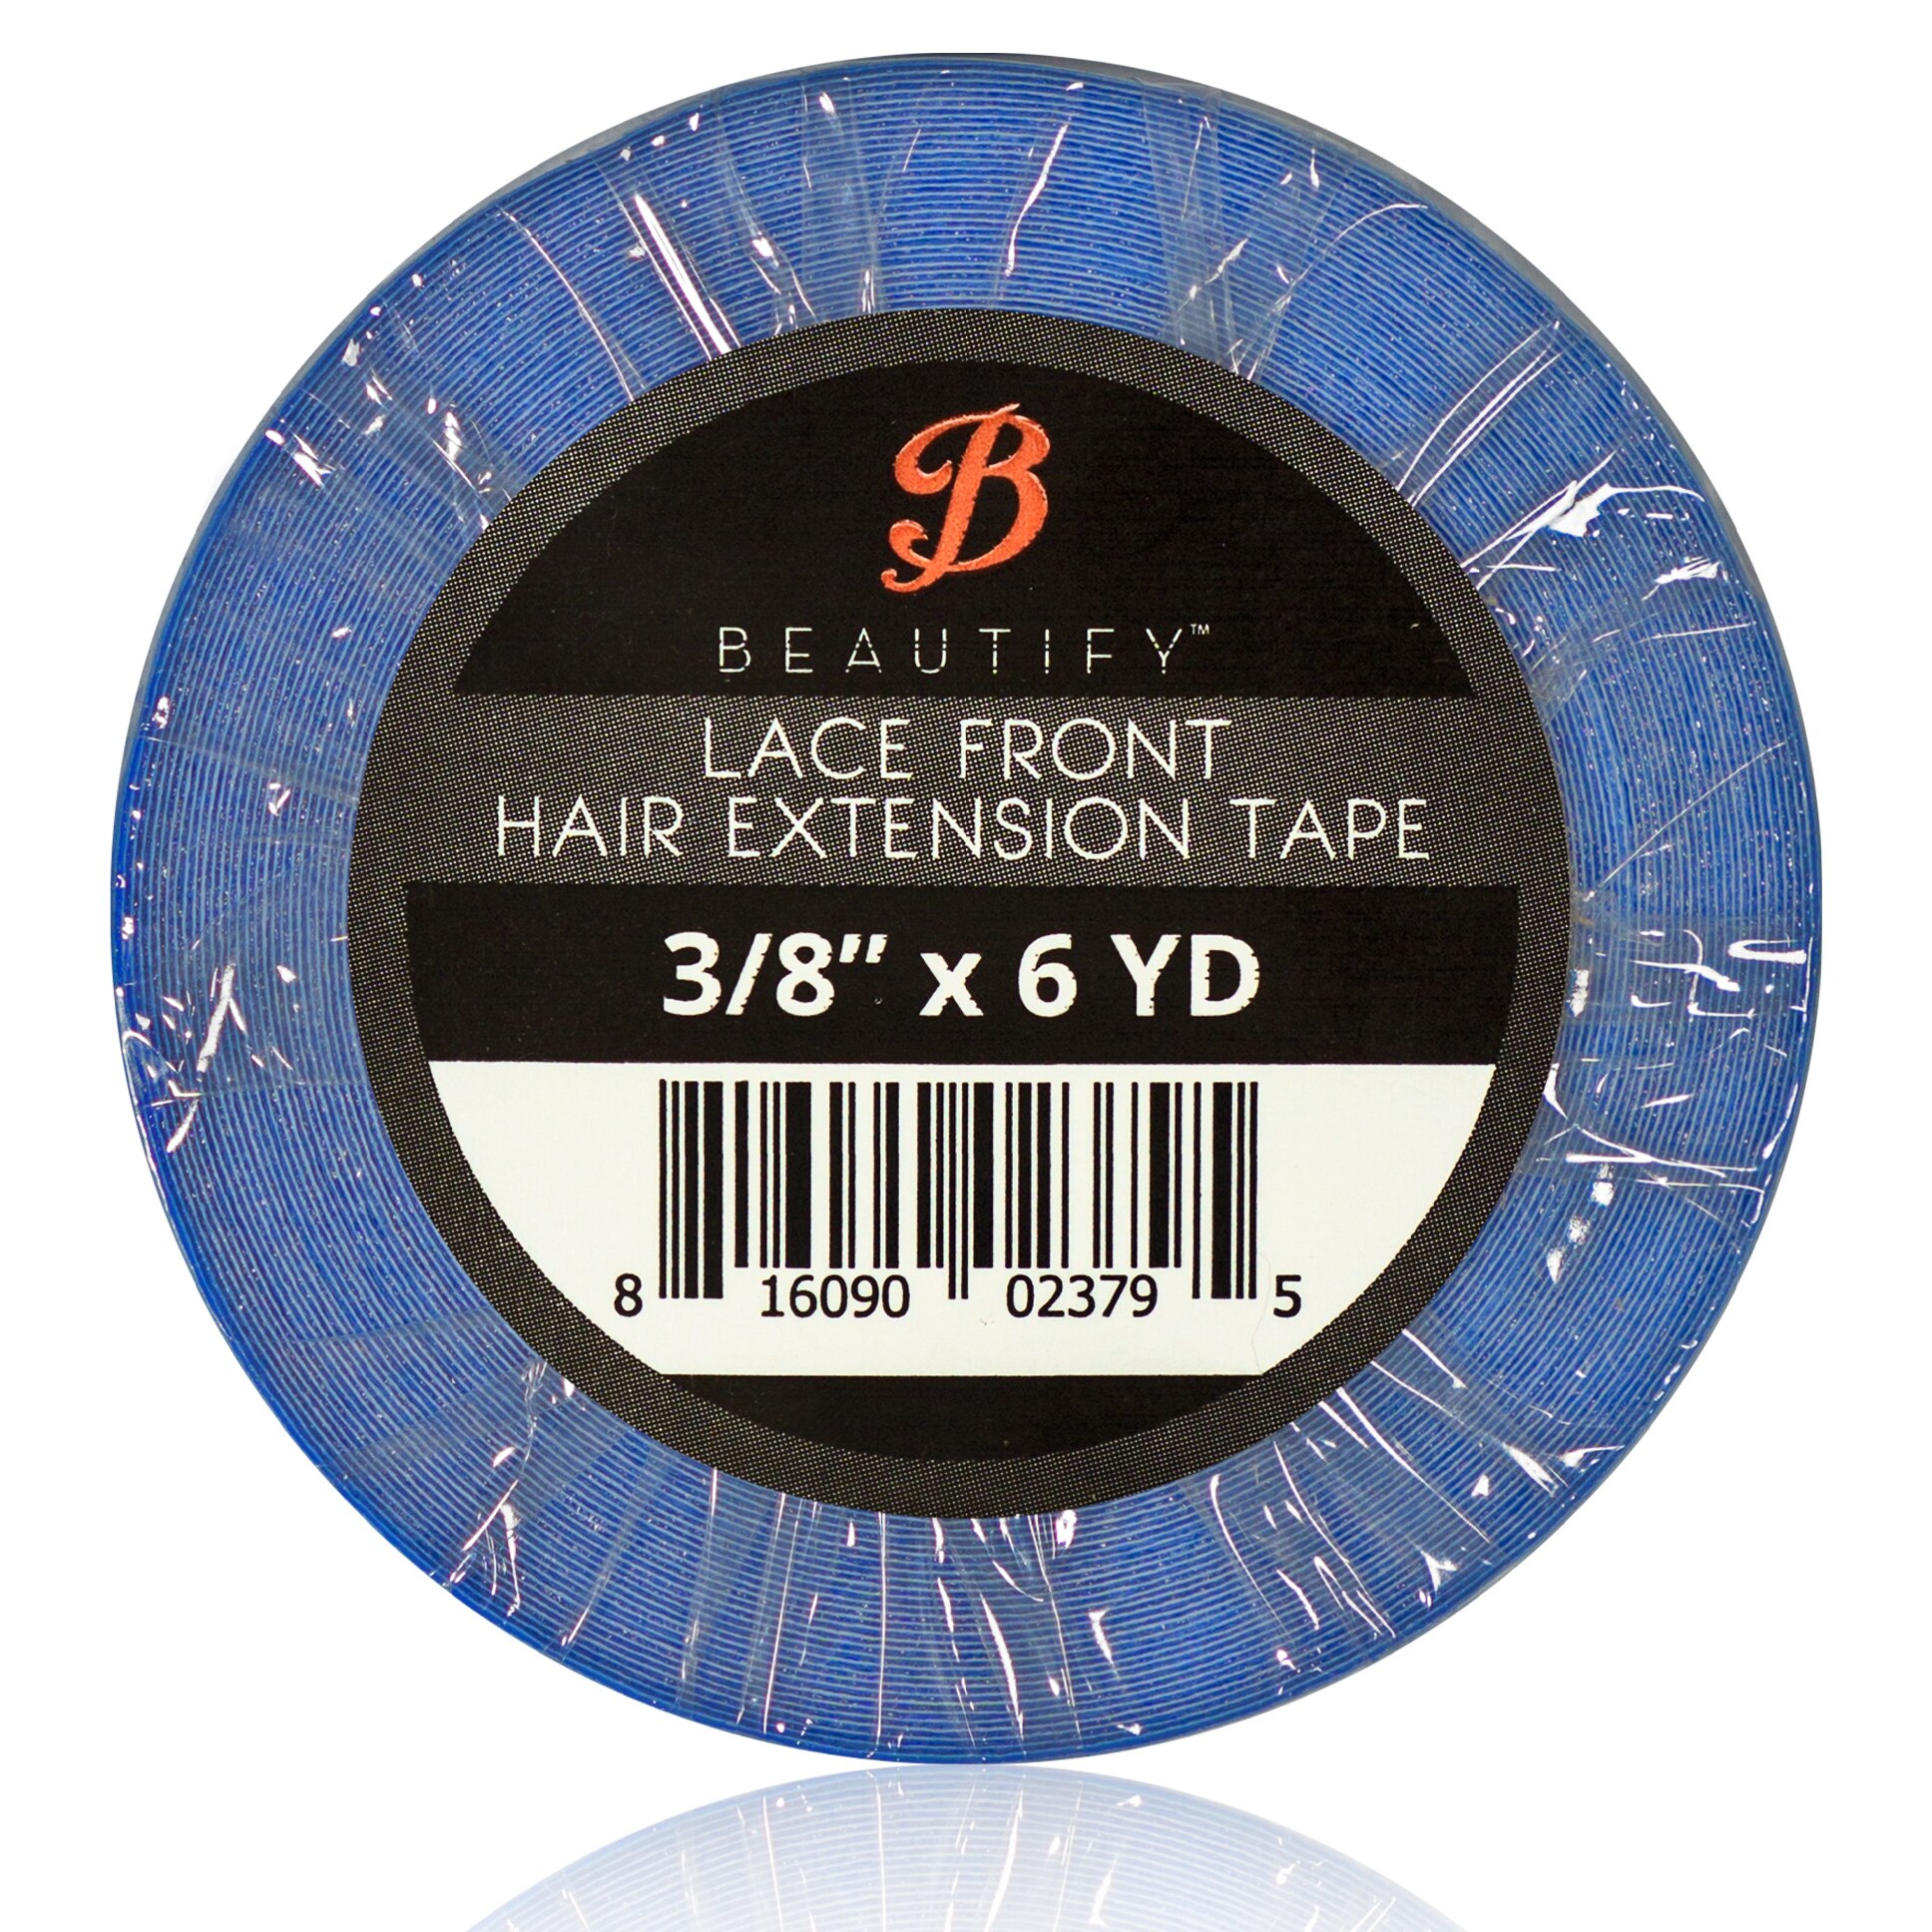 Walker Tape Lace Front Hair Extension - Bant Kaynak Bandı Rulo 3/8 ''X 6 Yds (1 Cm X 5,48M)